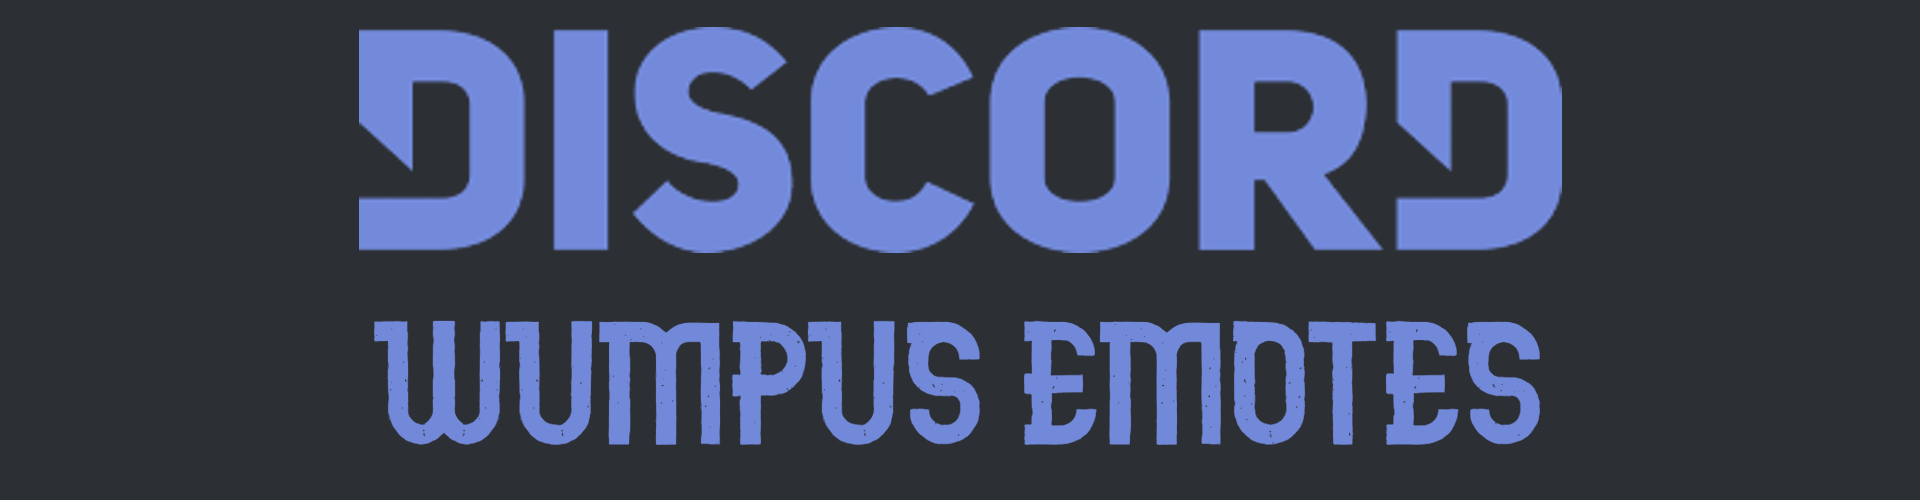 Wumpus Emotes/Emojis For Discord